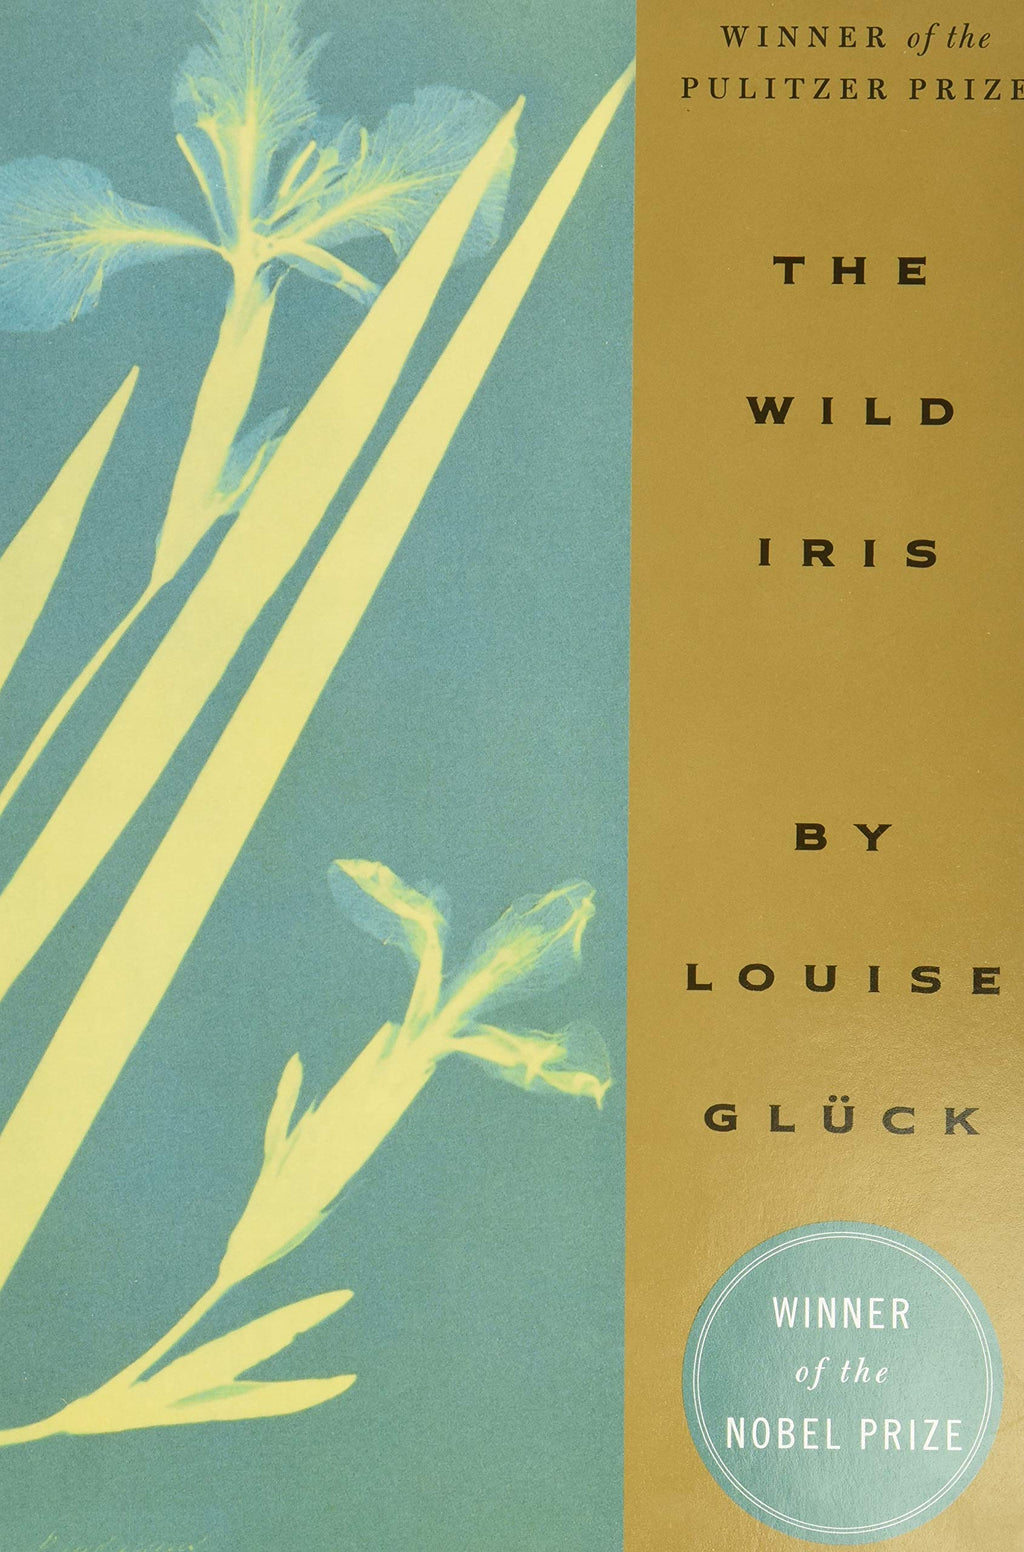 The Wild Iris by Louise Gluck